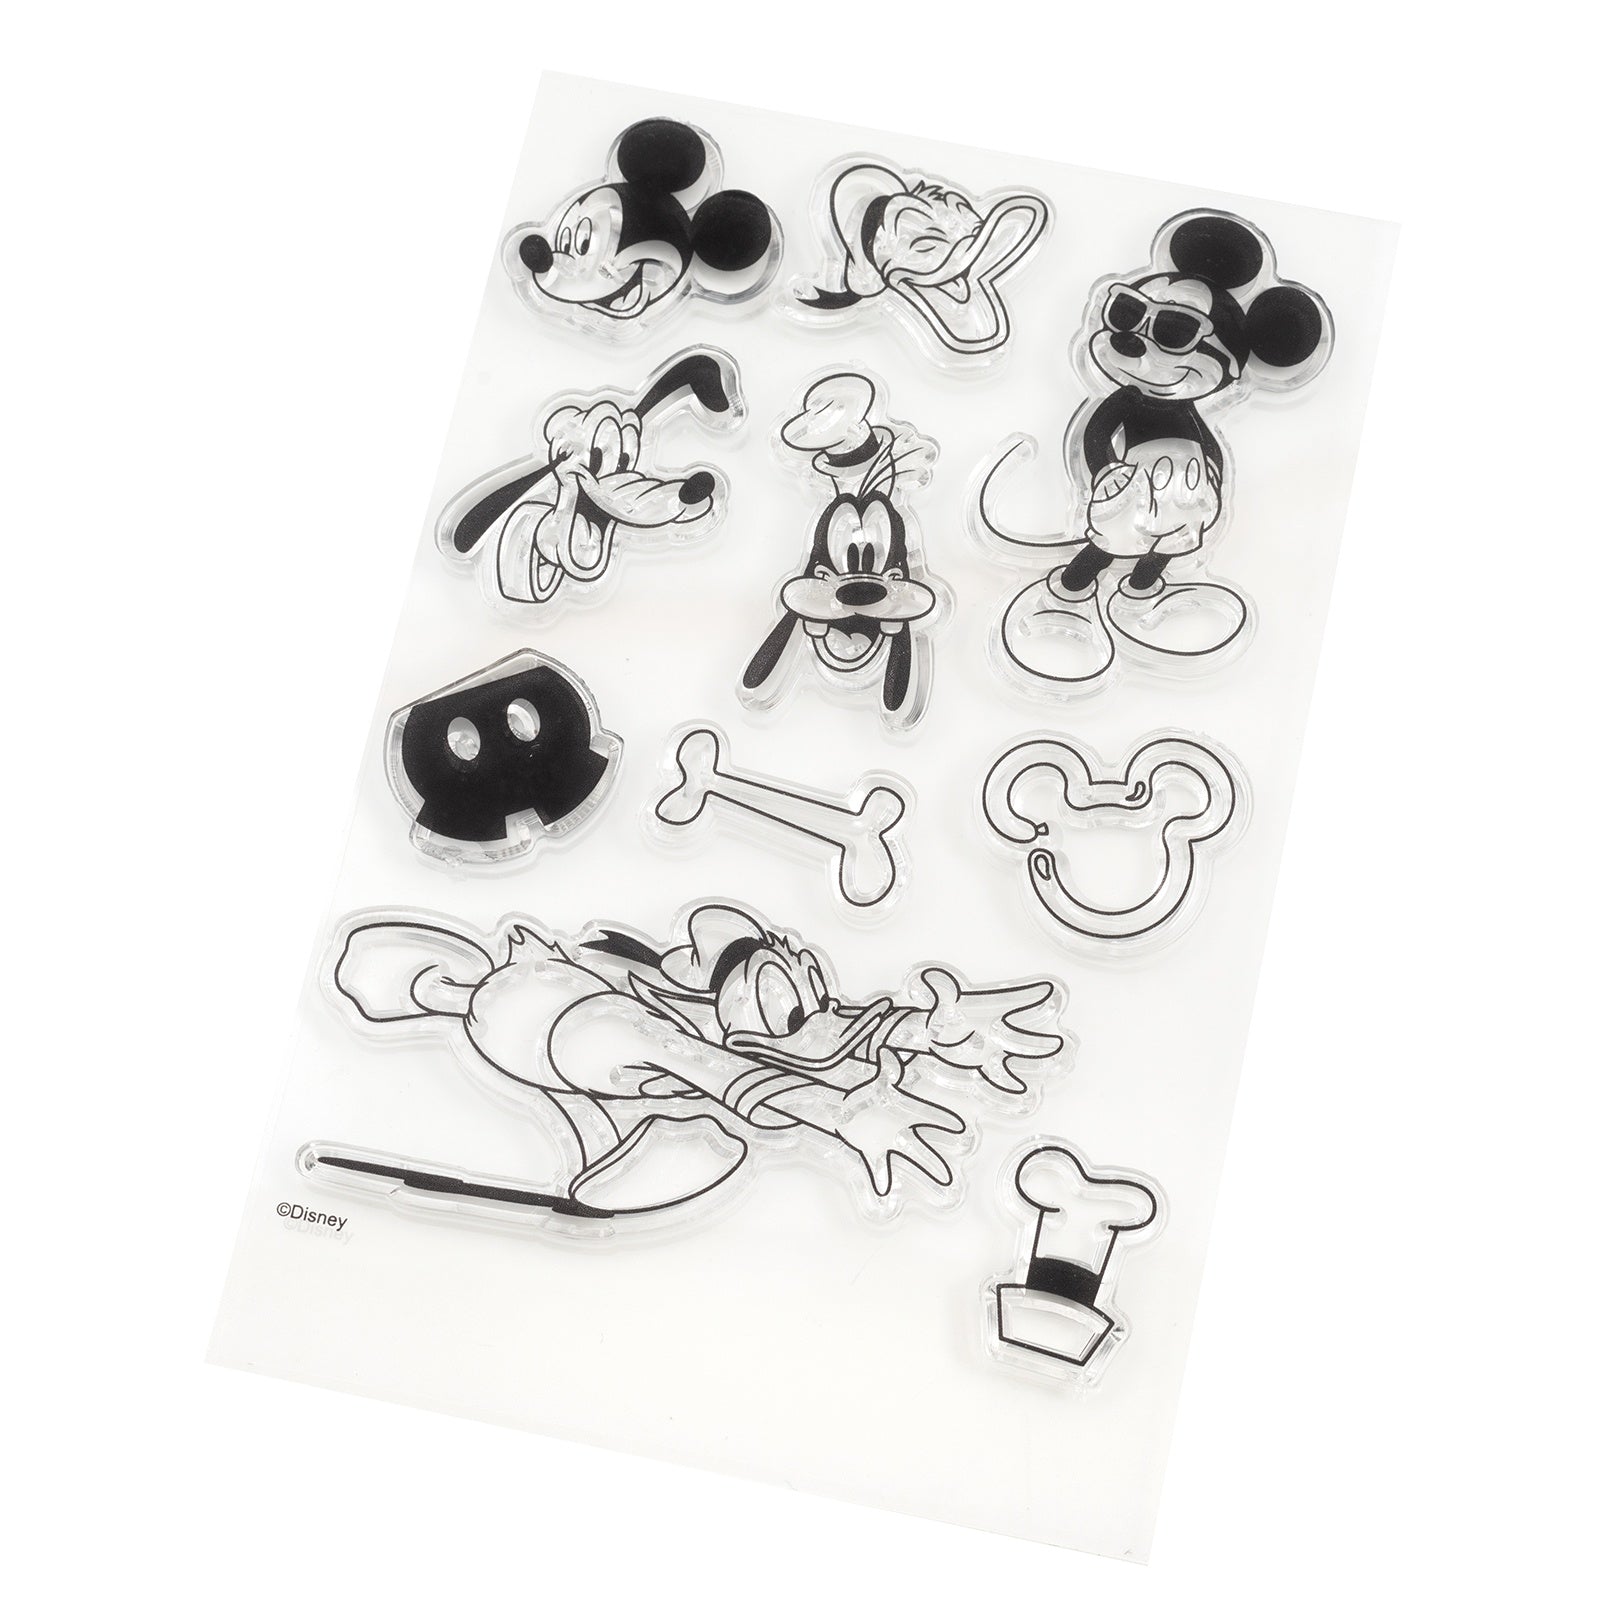 EK Disney Clear Stamps-Princess – American Crafts